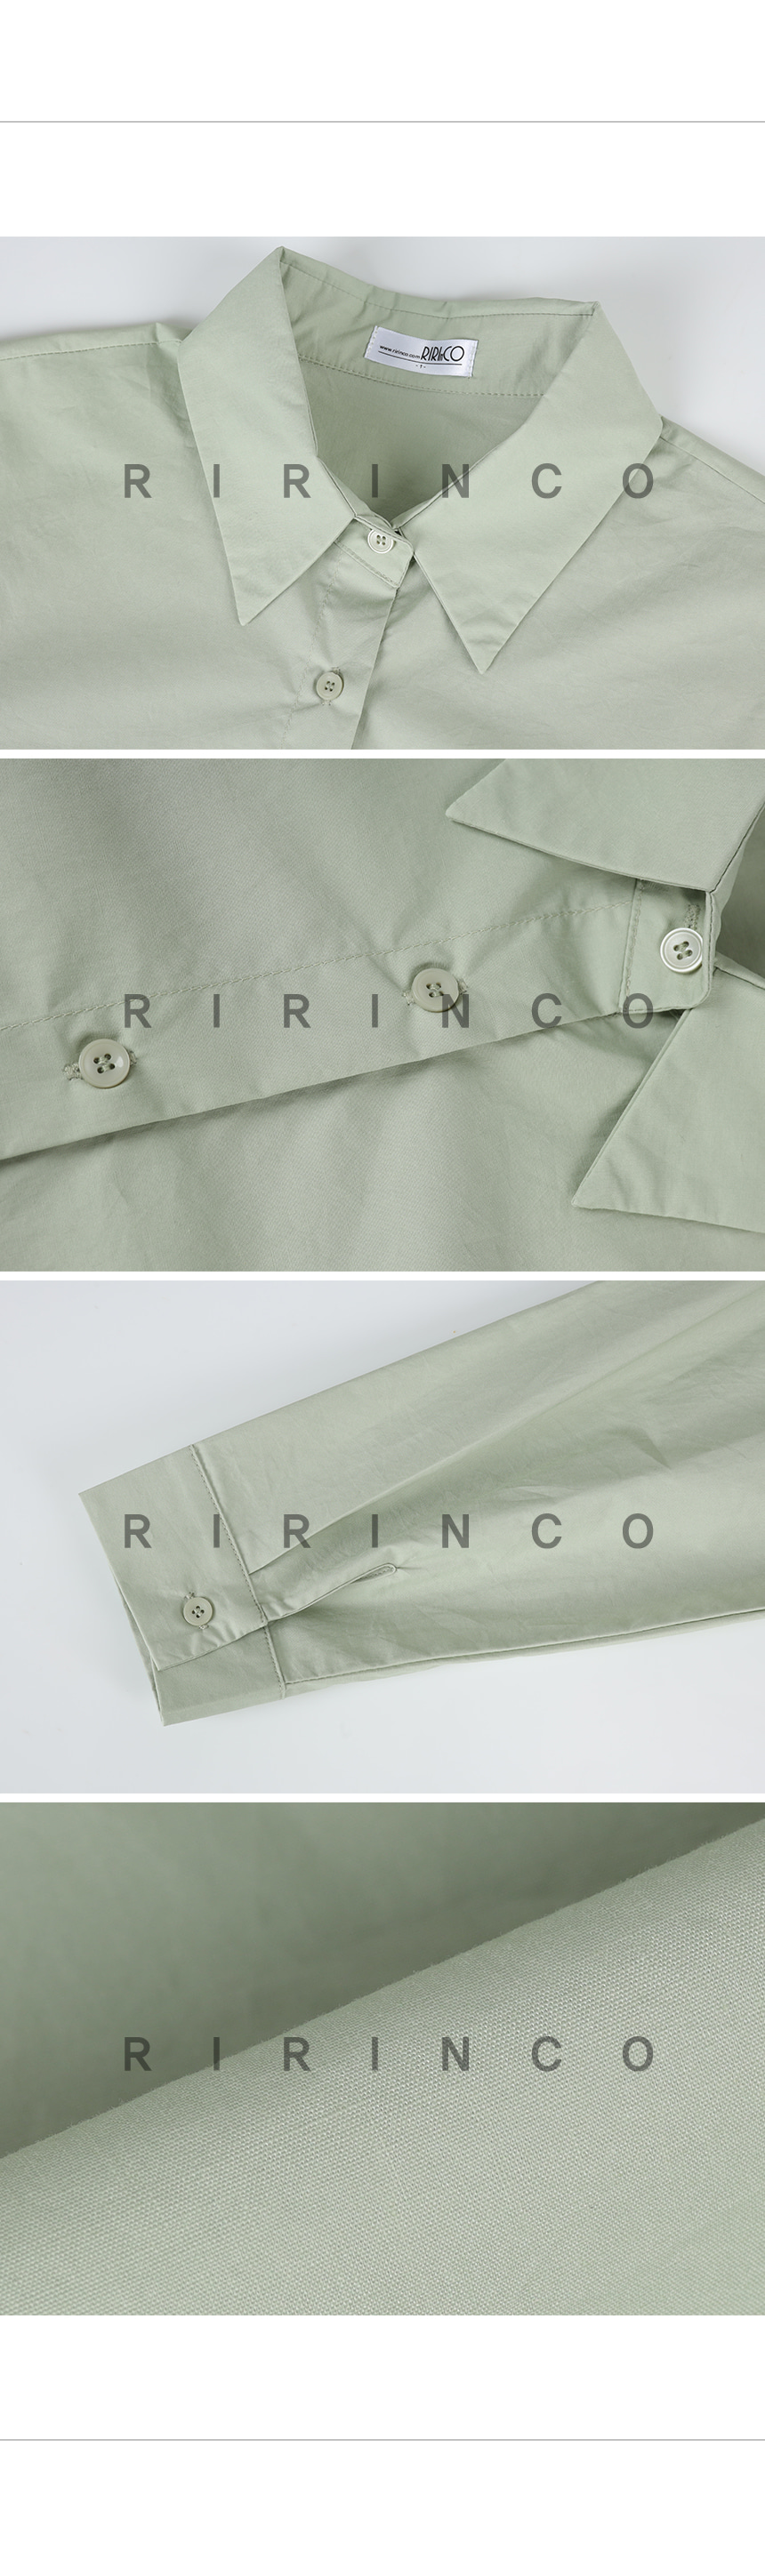 RIRINCO コットンベーシックシャツ